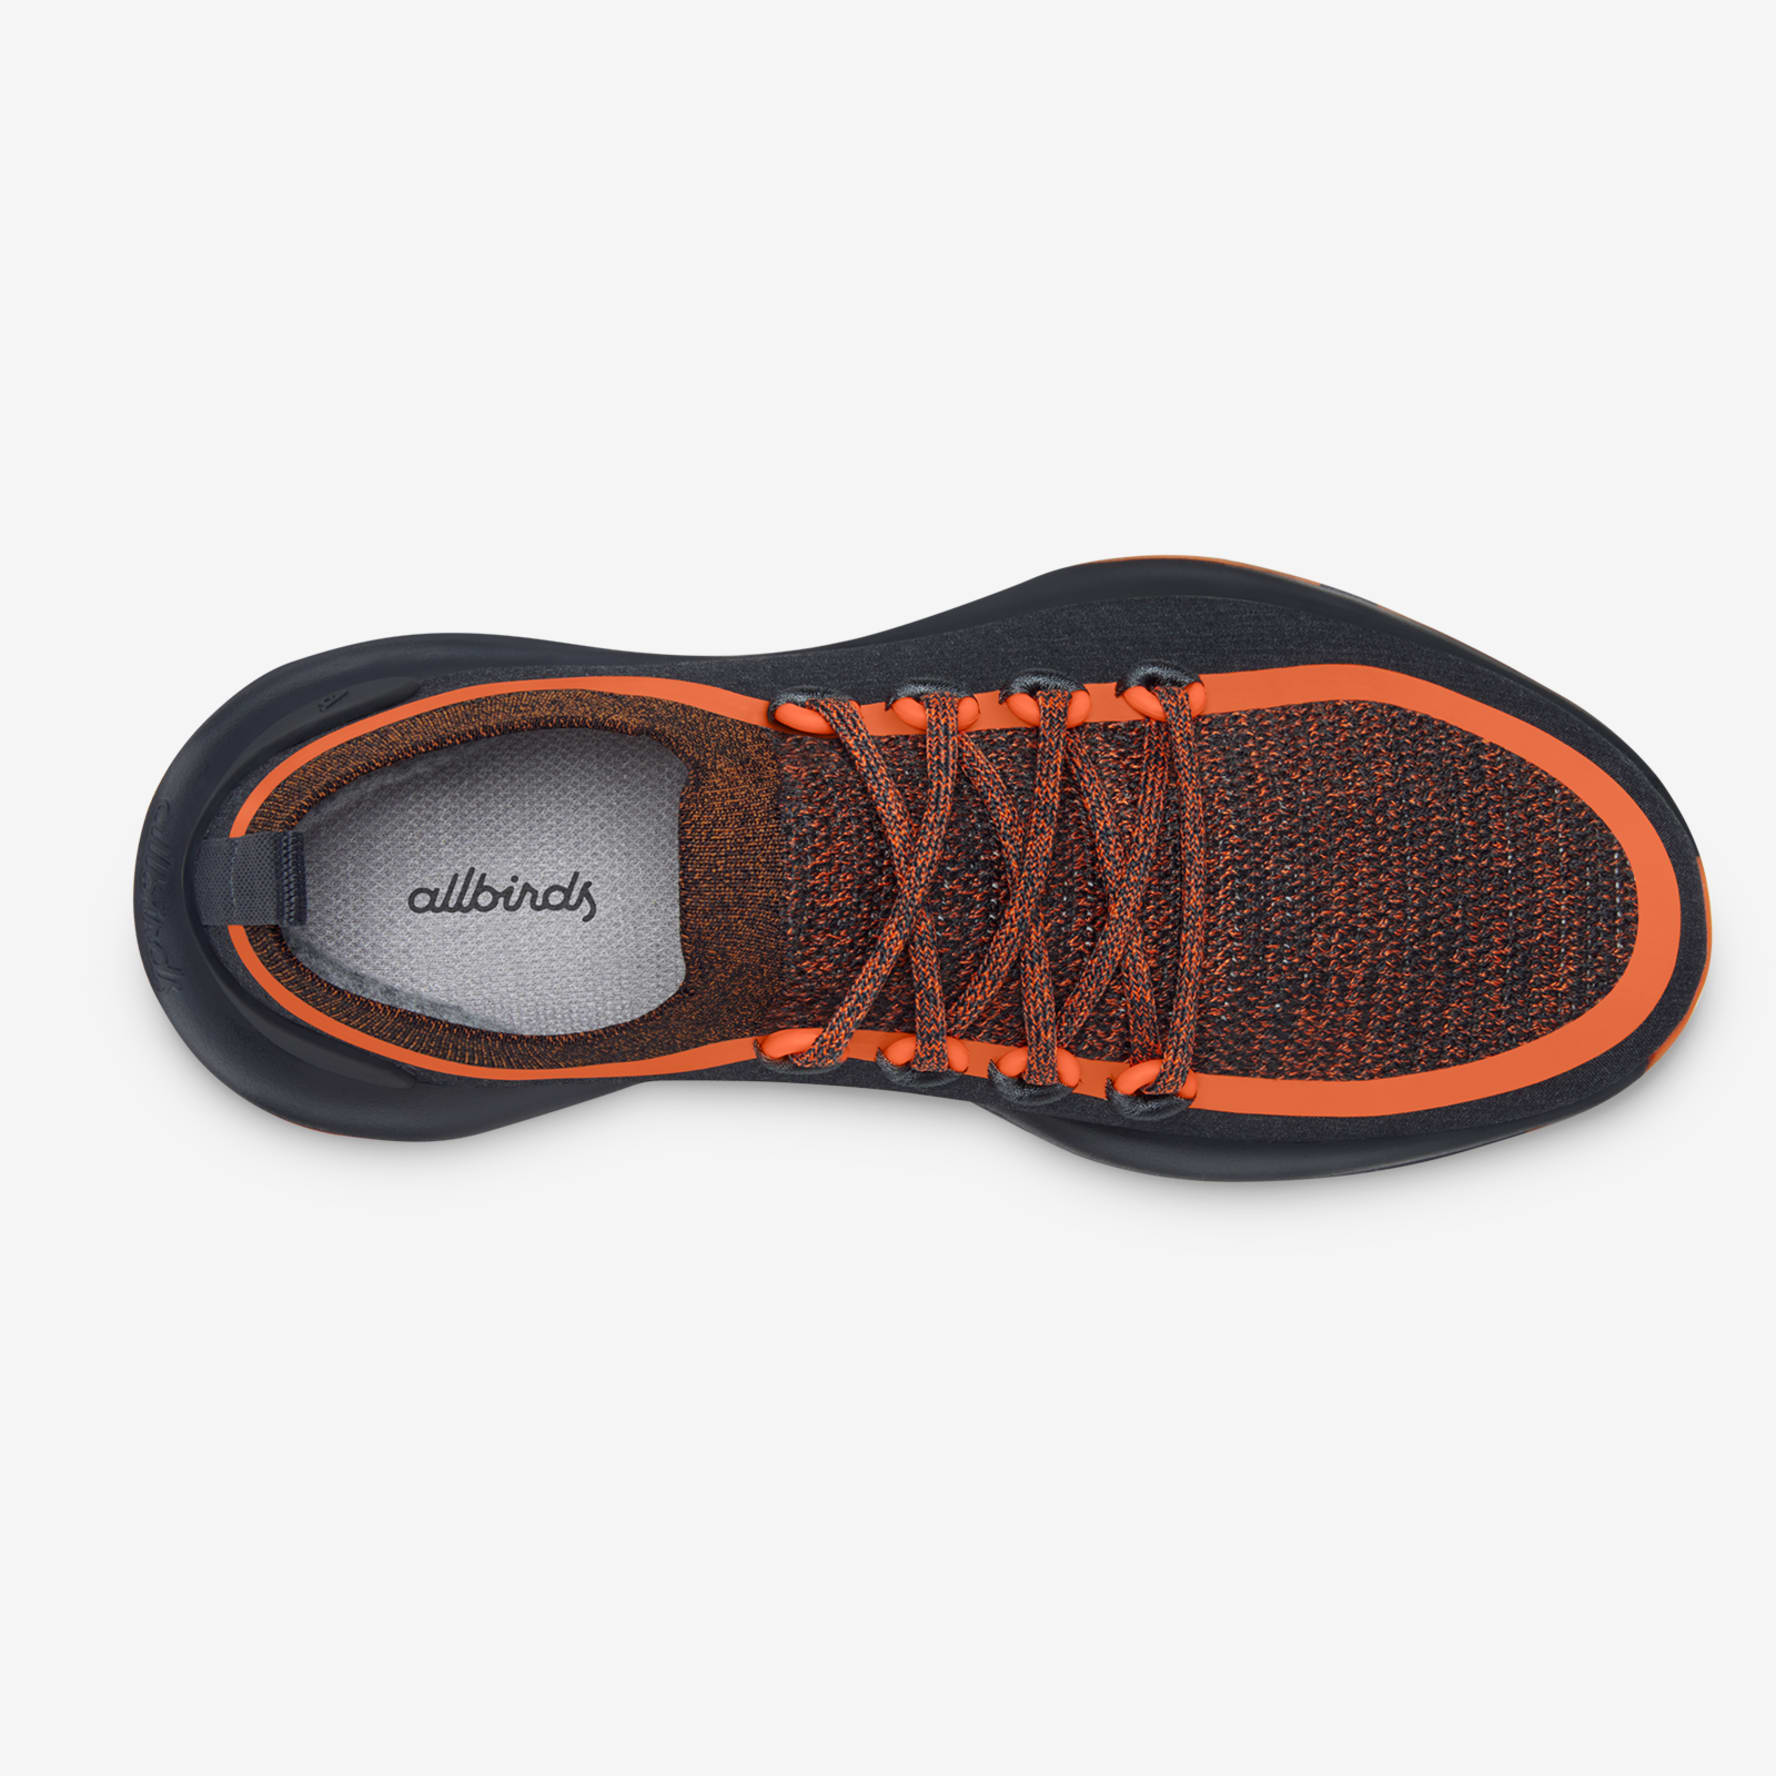 mens black orange shoes